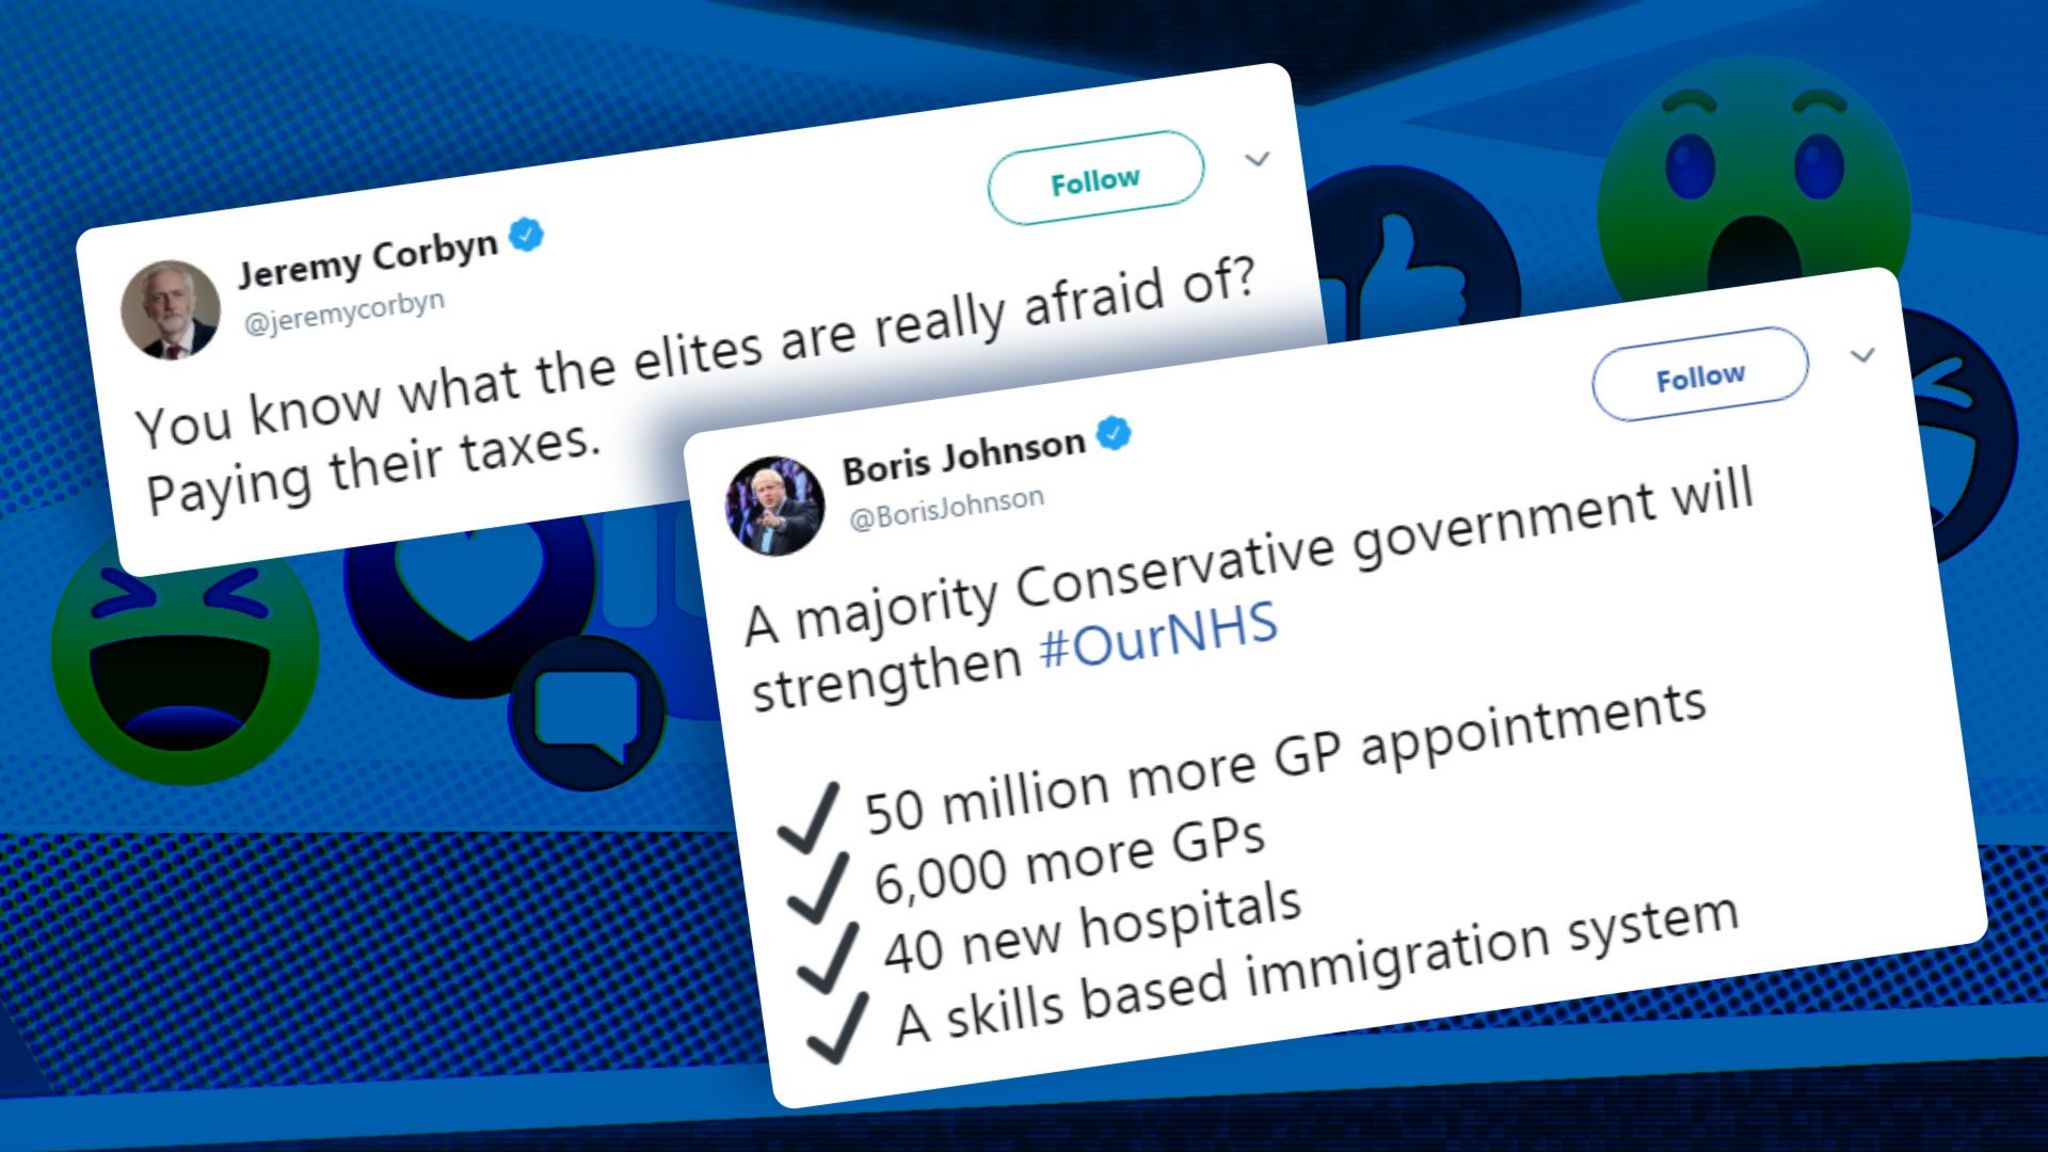 Jeremy Corbyn and Boris Johnson tweets